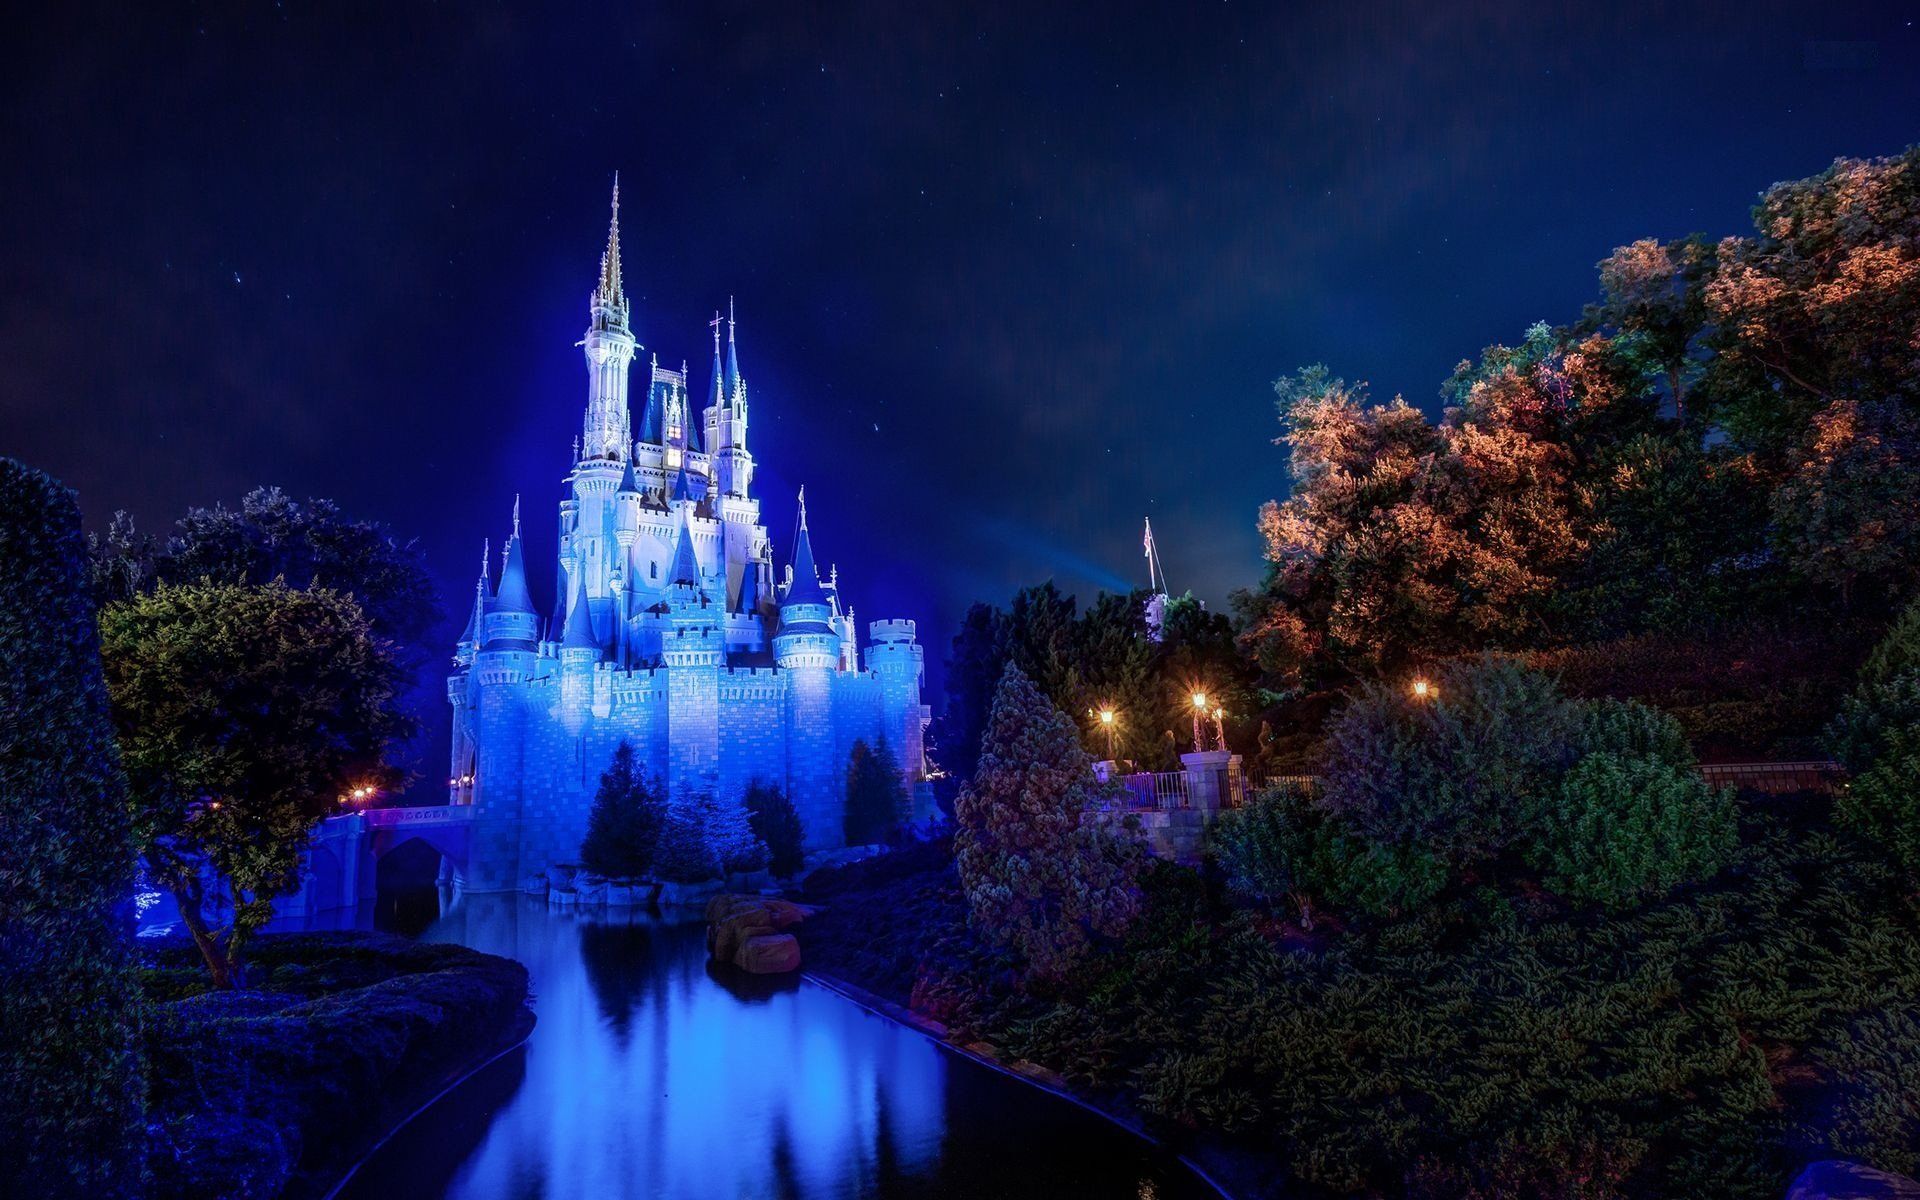 A nighttime view of the castle at Disney World. - Disney, Disneyland